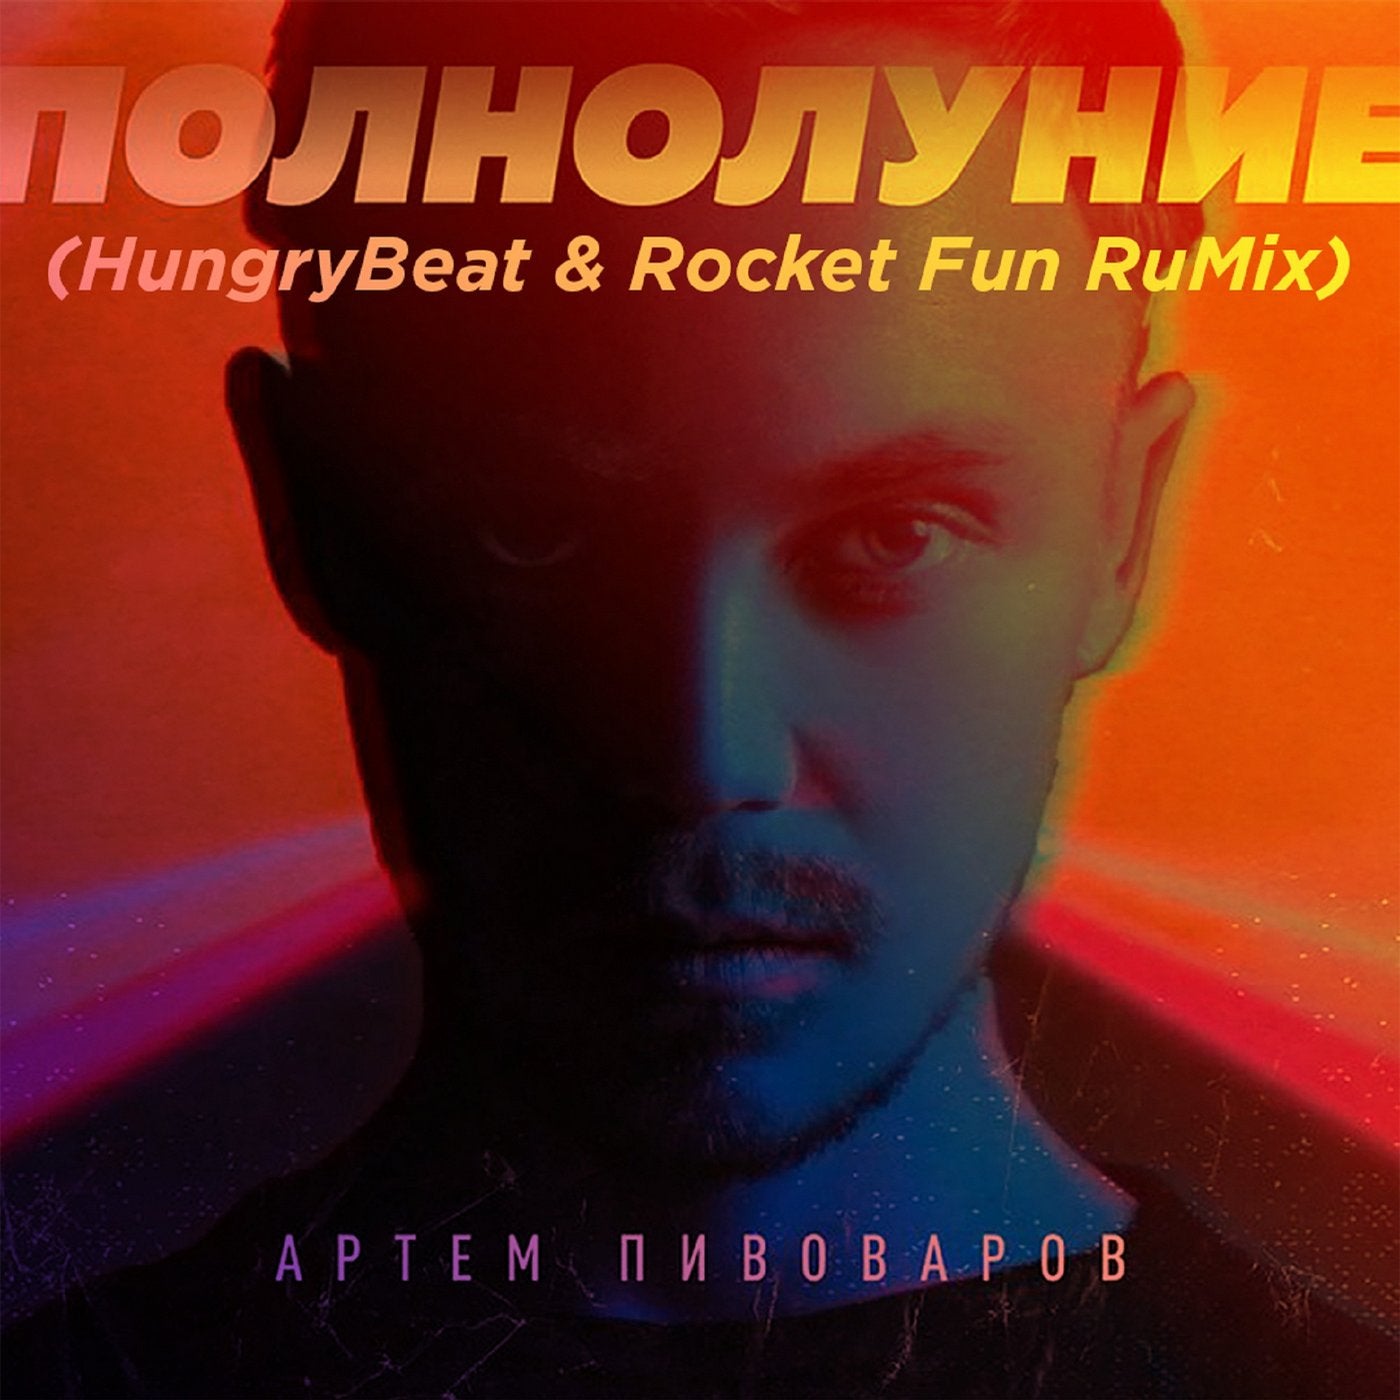 Polnolunie (HungryBeat & Rocket Fun Rumix)